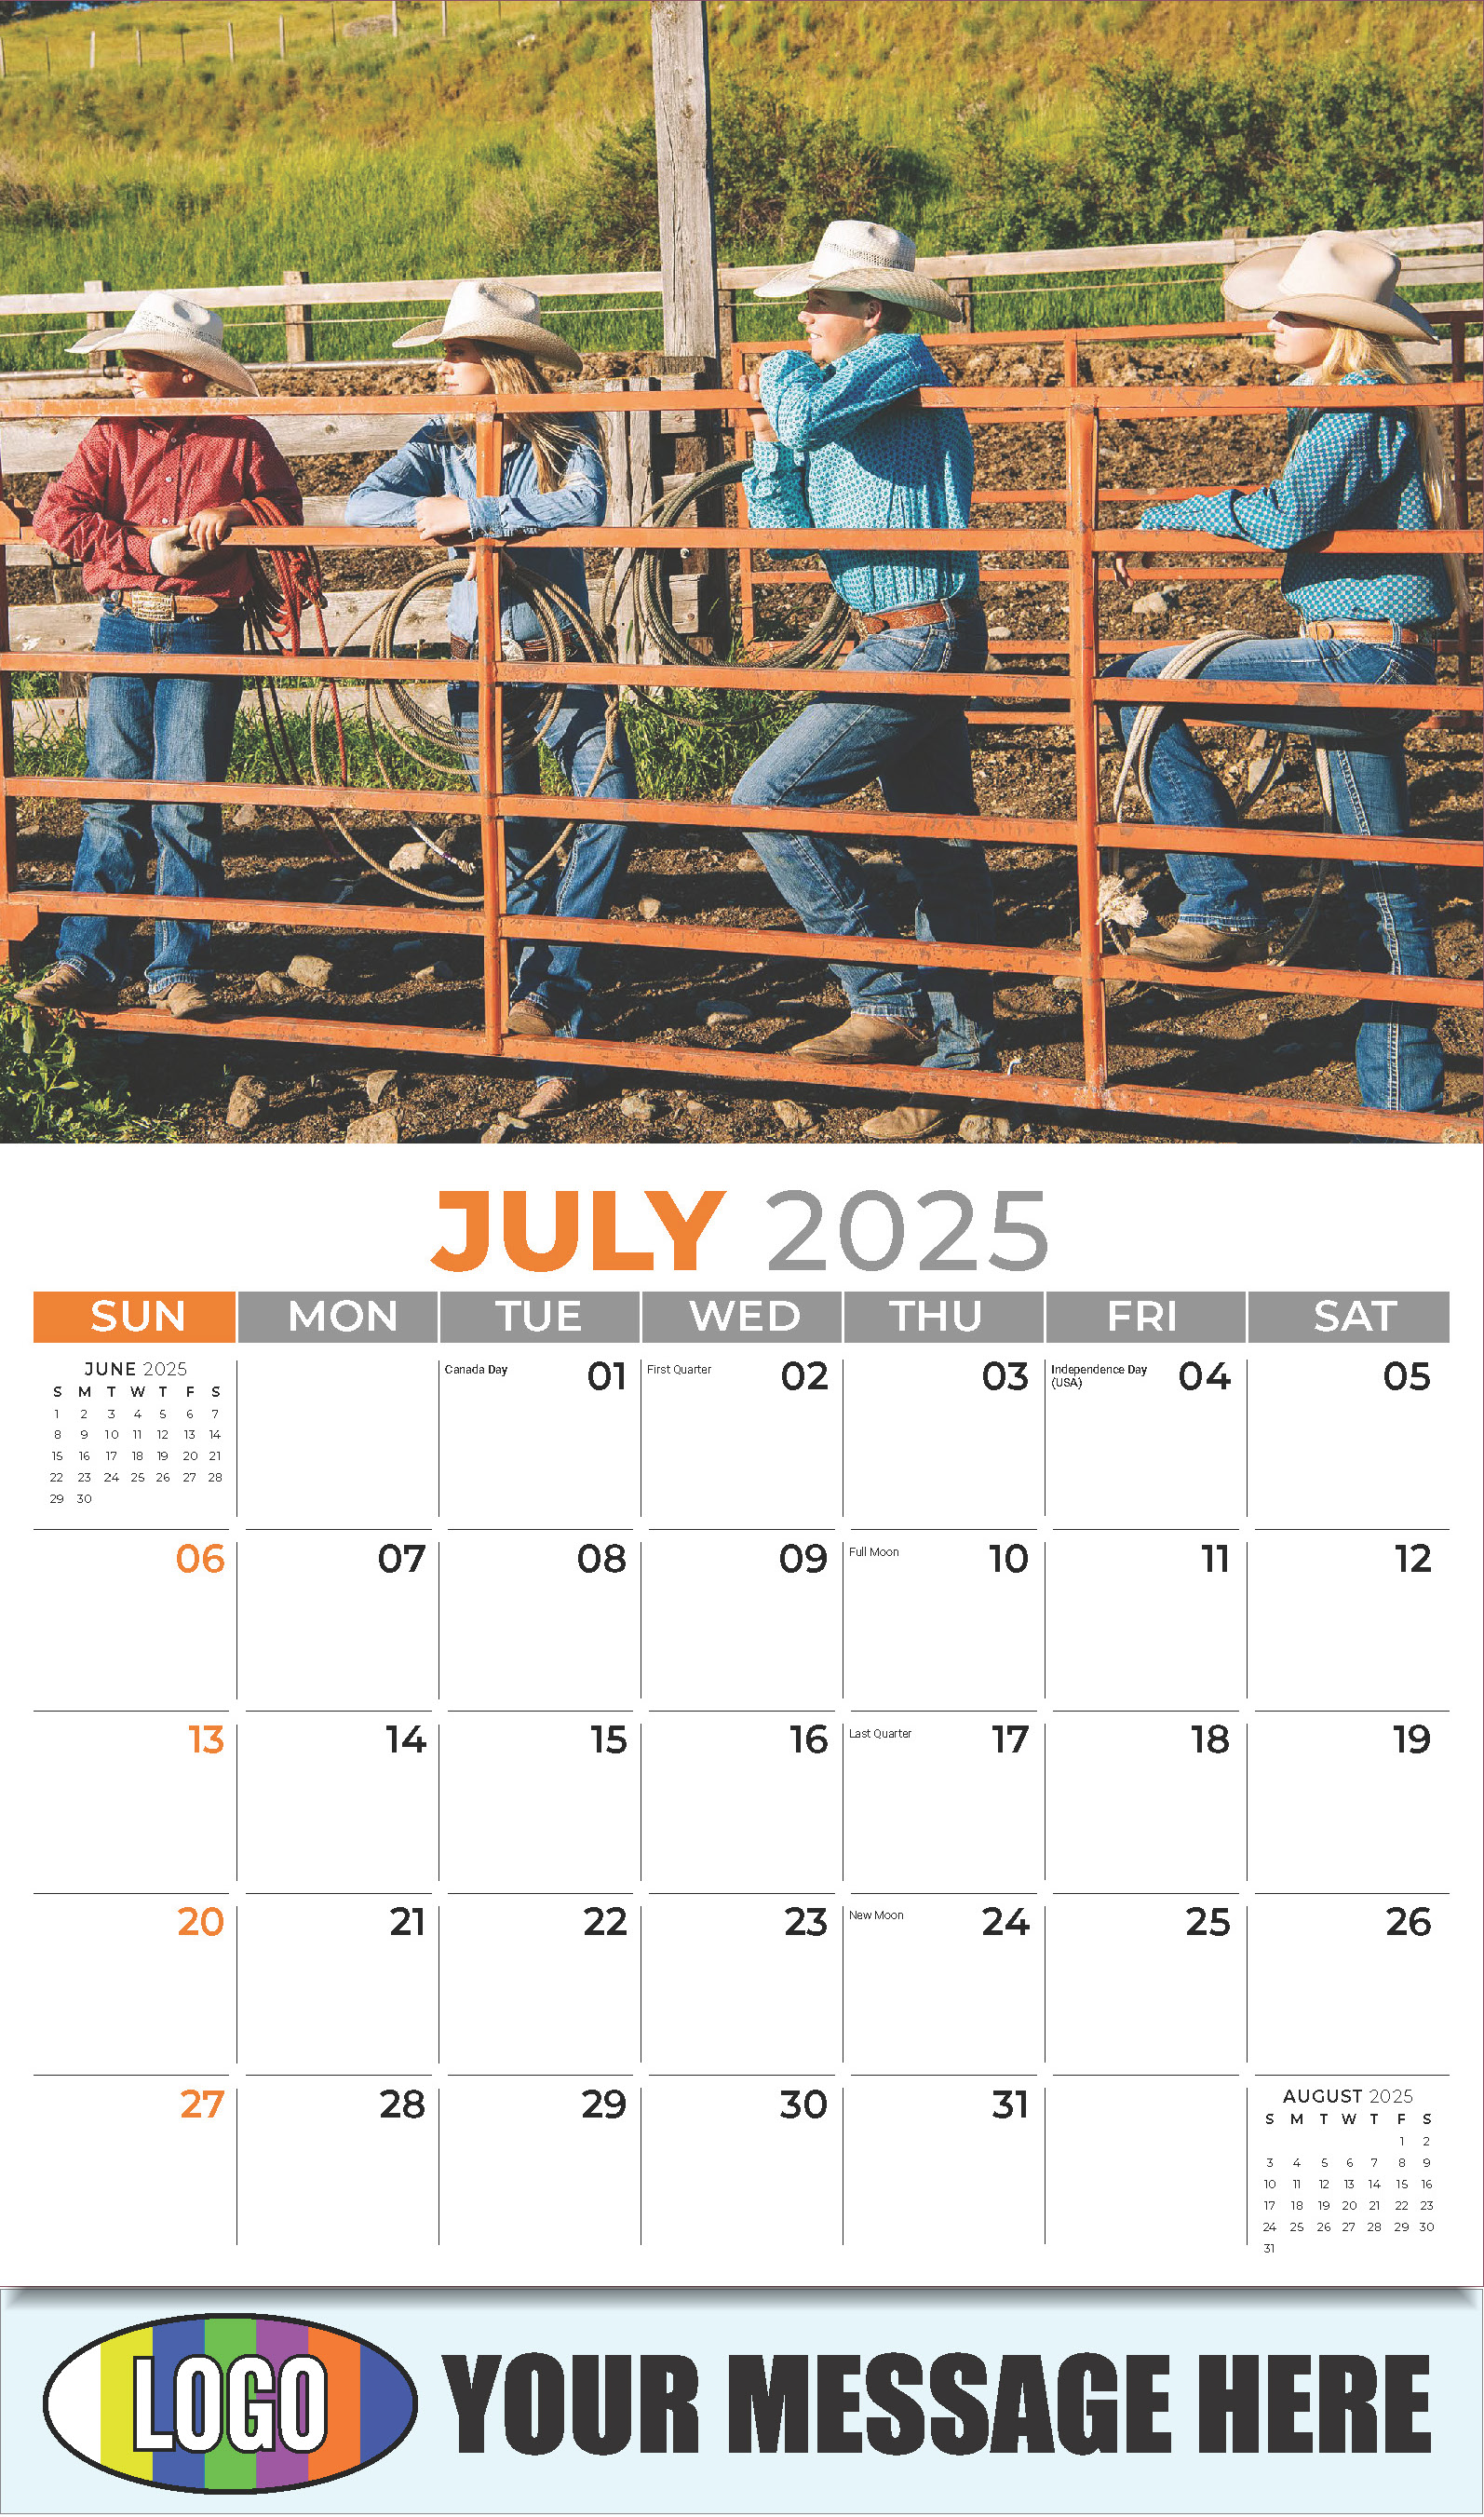 Country Spirit 2025 Business Advertising Calendar - July